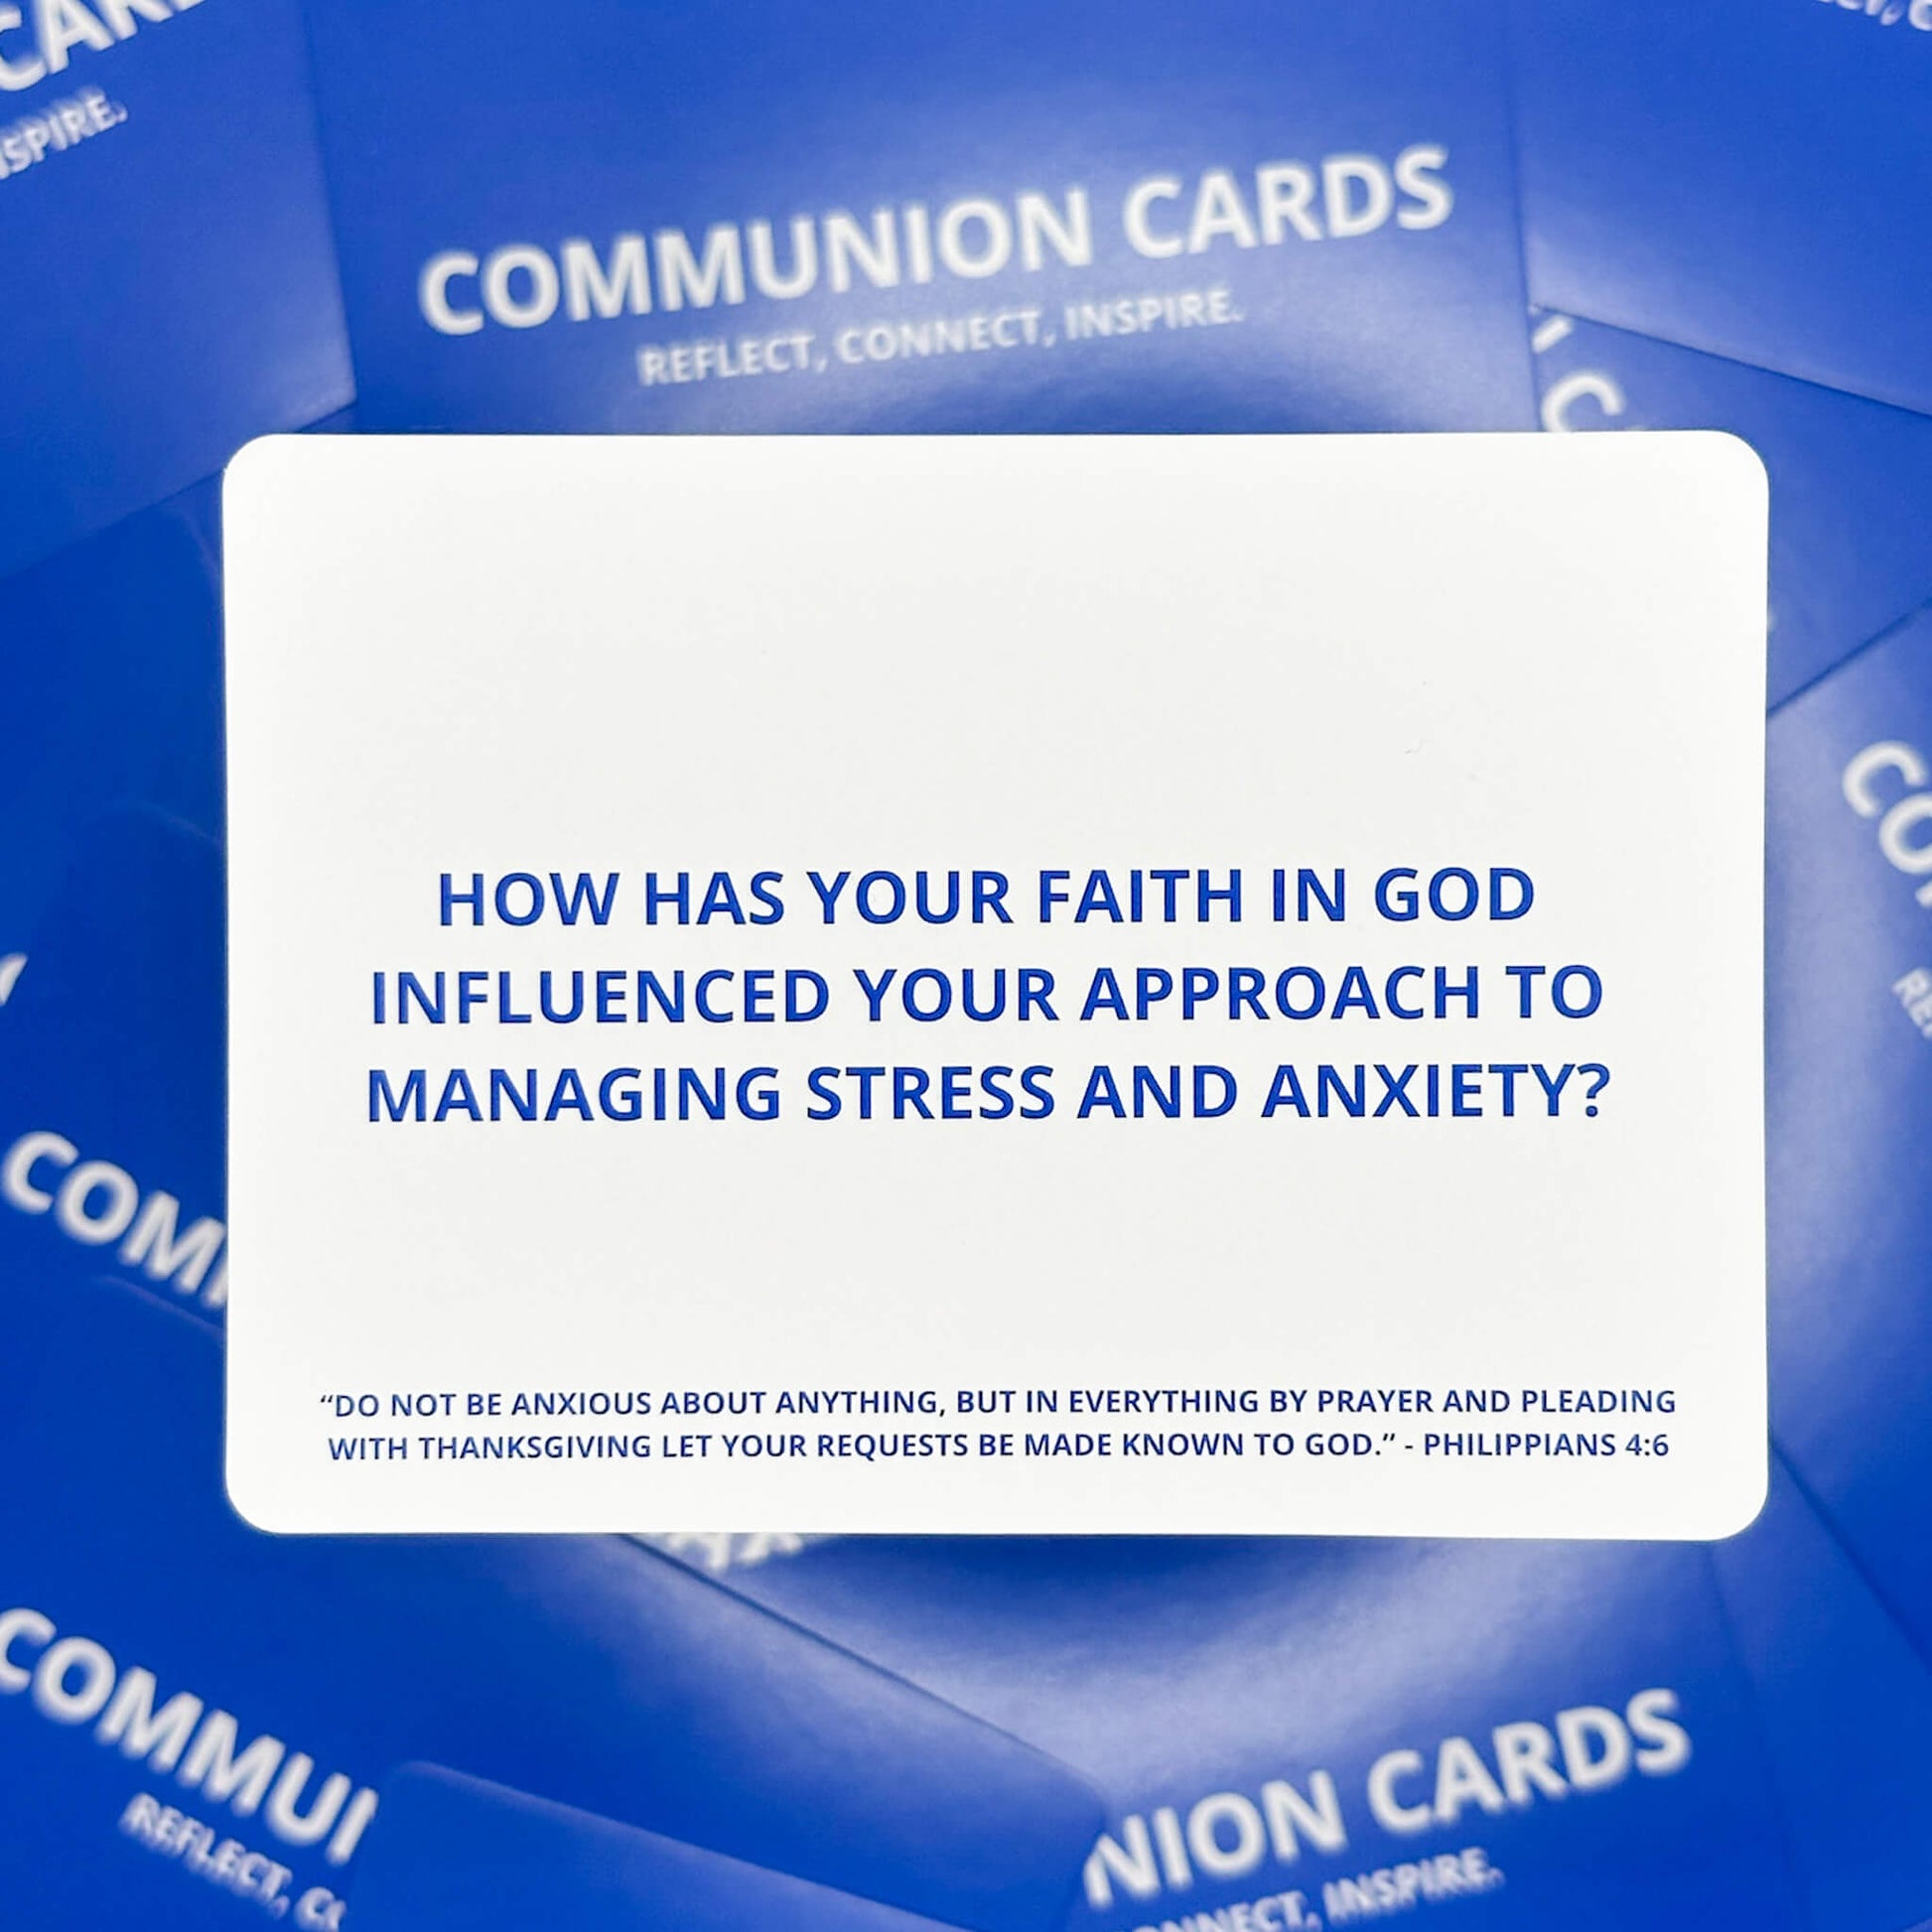 Communion Cards - Pop Open Cards